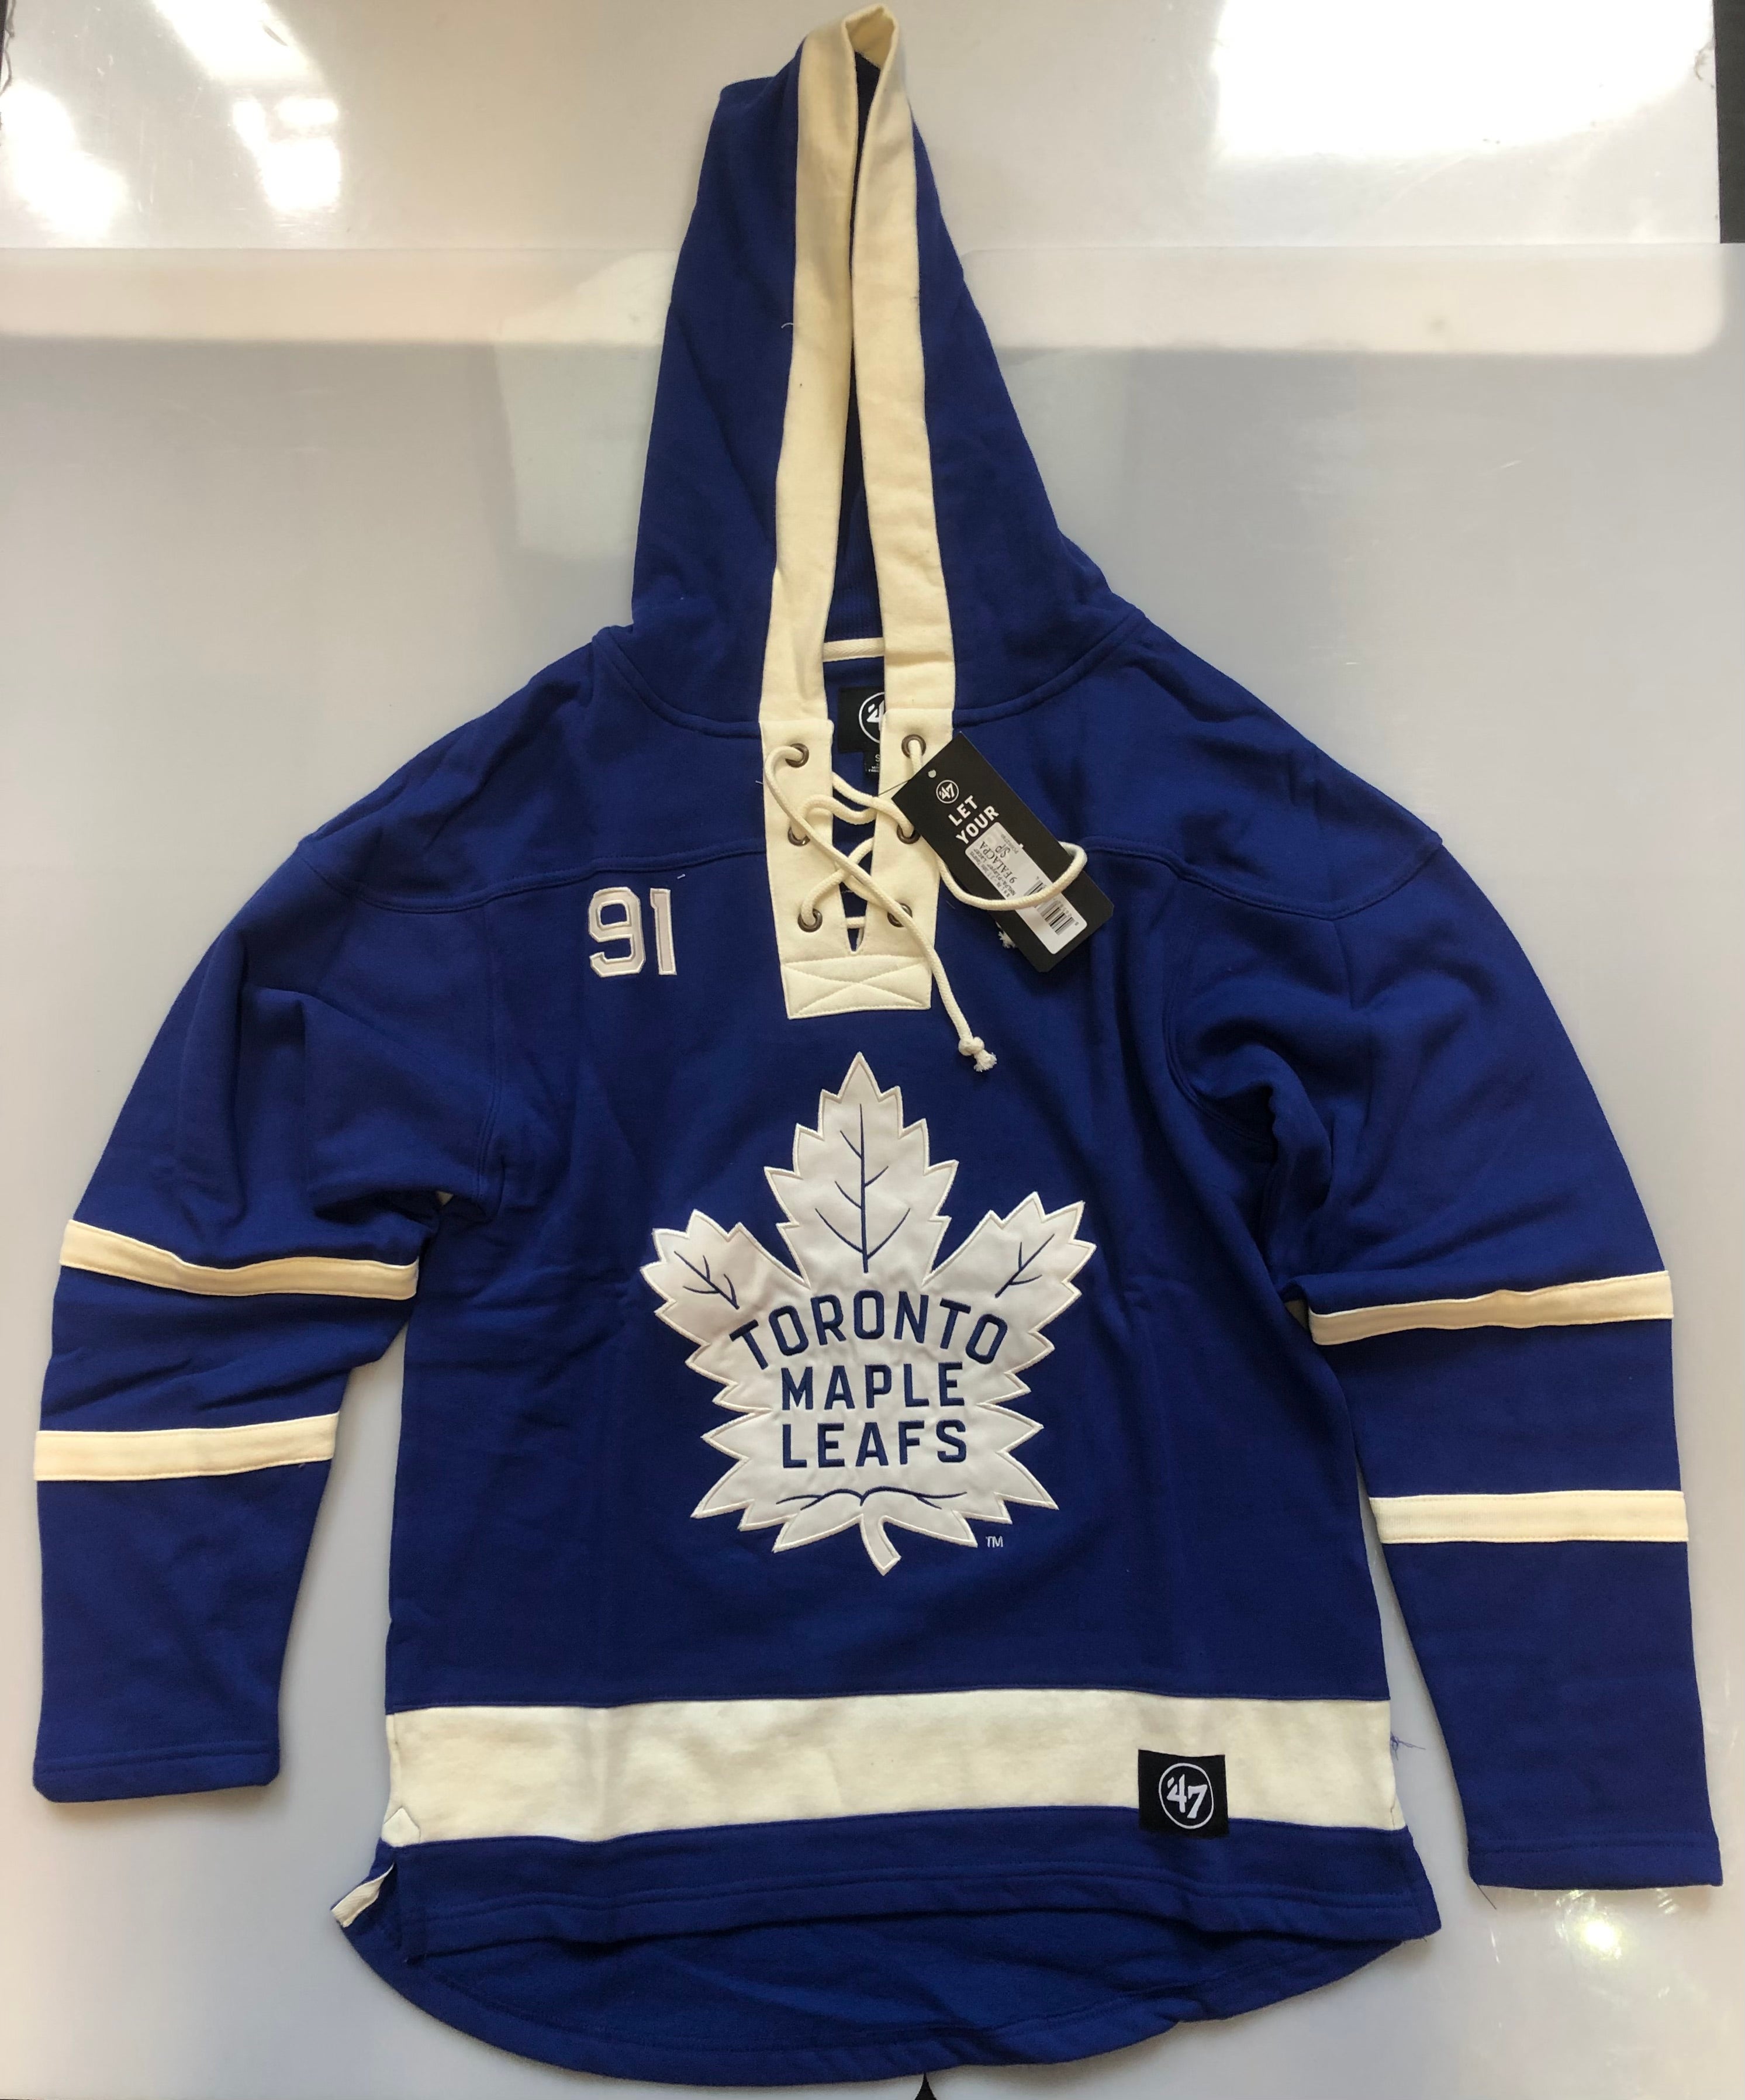 Toronto Maple Leafs Hoodie - Men's Medium - New/Mint Condition